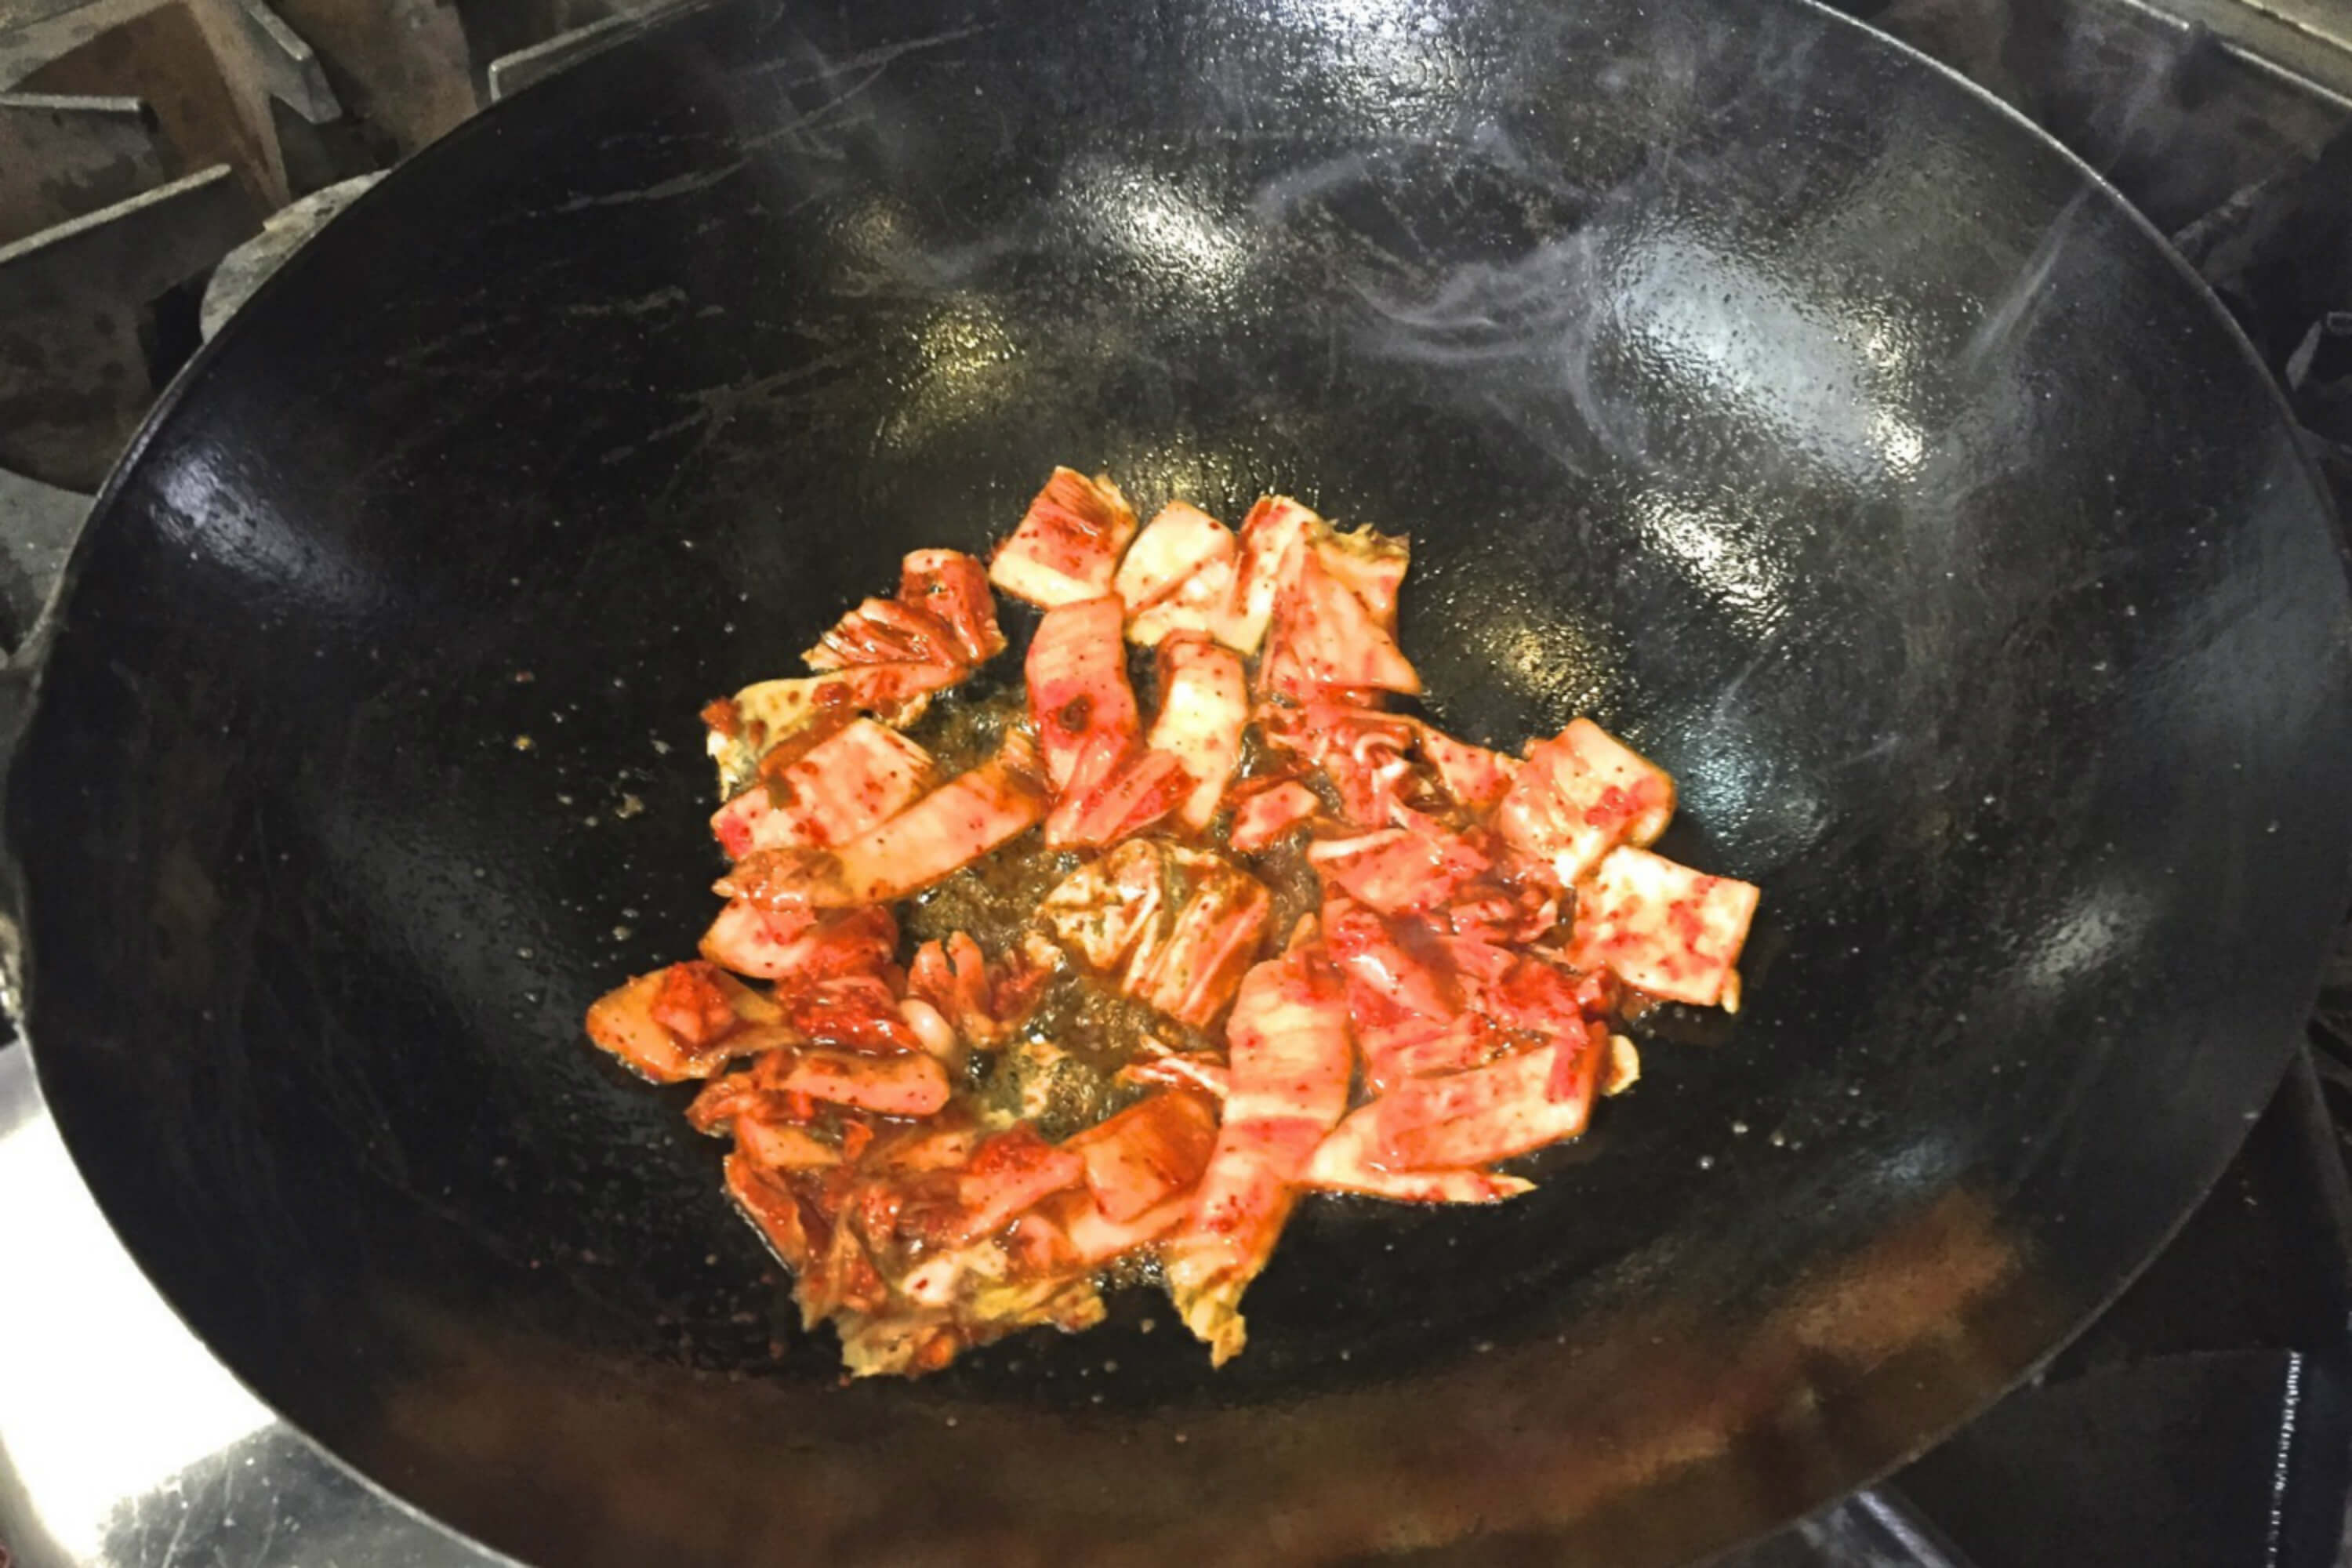 Kimchi in a wok to make kimchi fried rice at Hanjip. Credit: Copyright 2016 David Latt